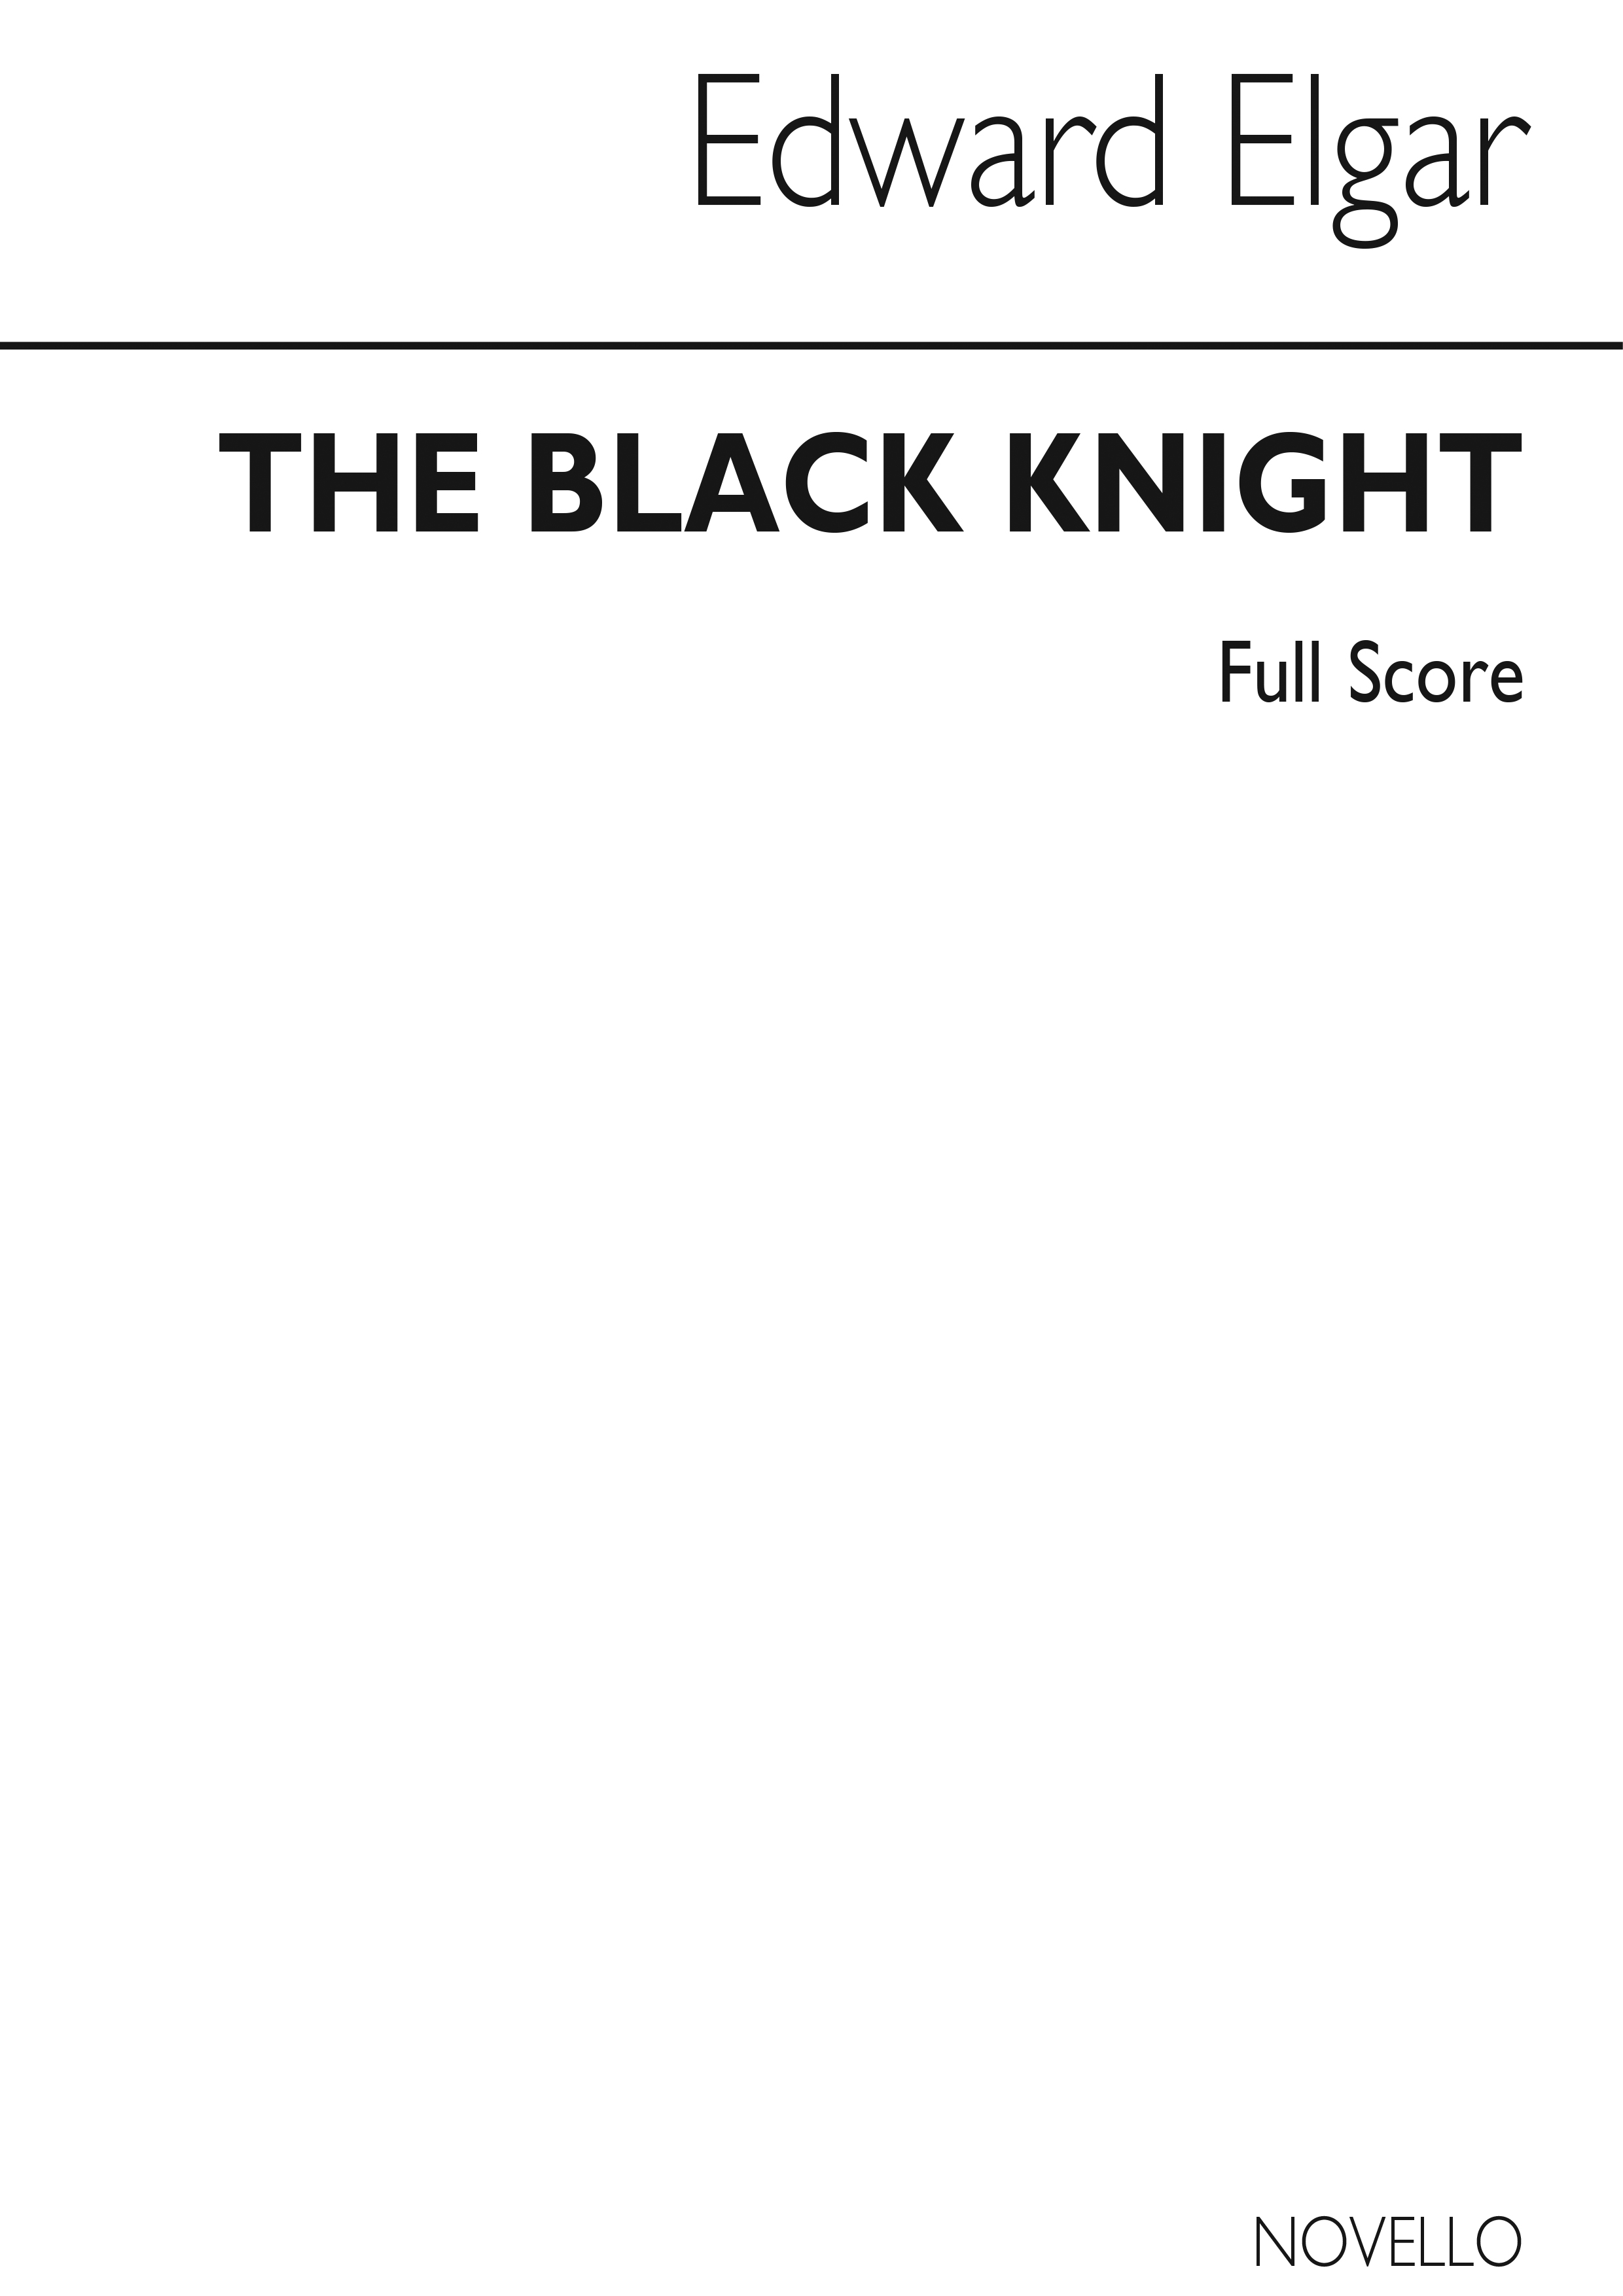 Edward Elgar: The Black Knight (Full Score)